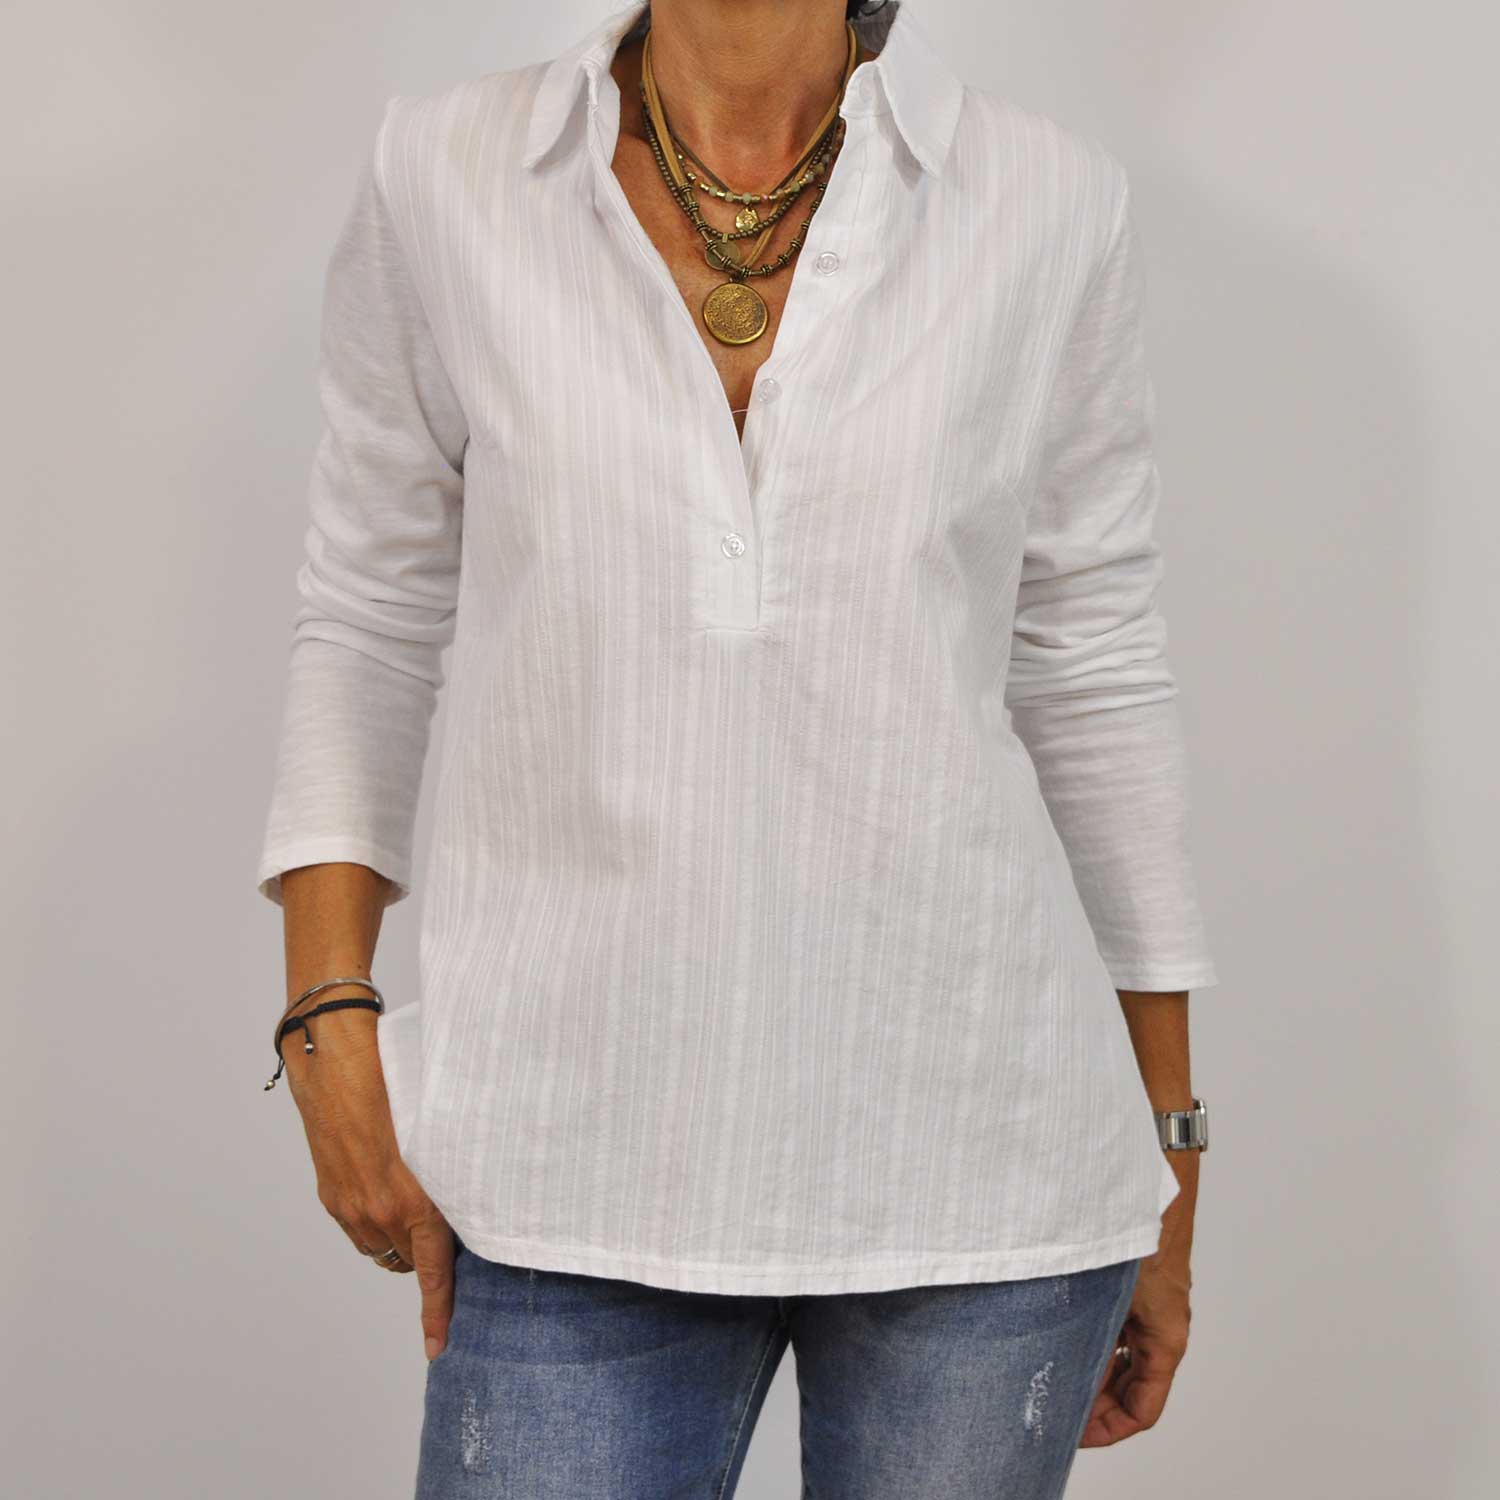 White texture shirt